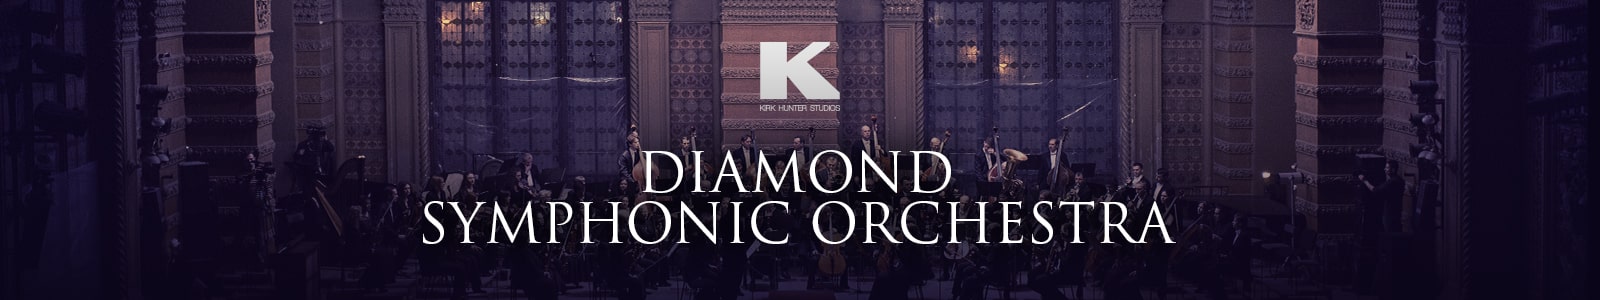 Kirk Hunter Studios Diamond Symphonic Orchestra